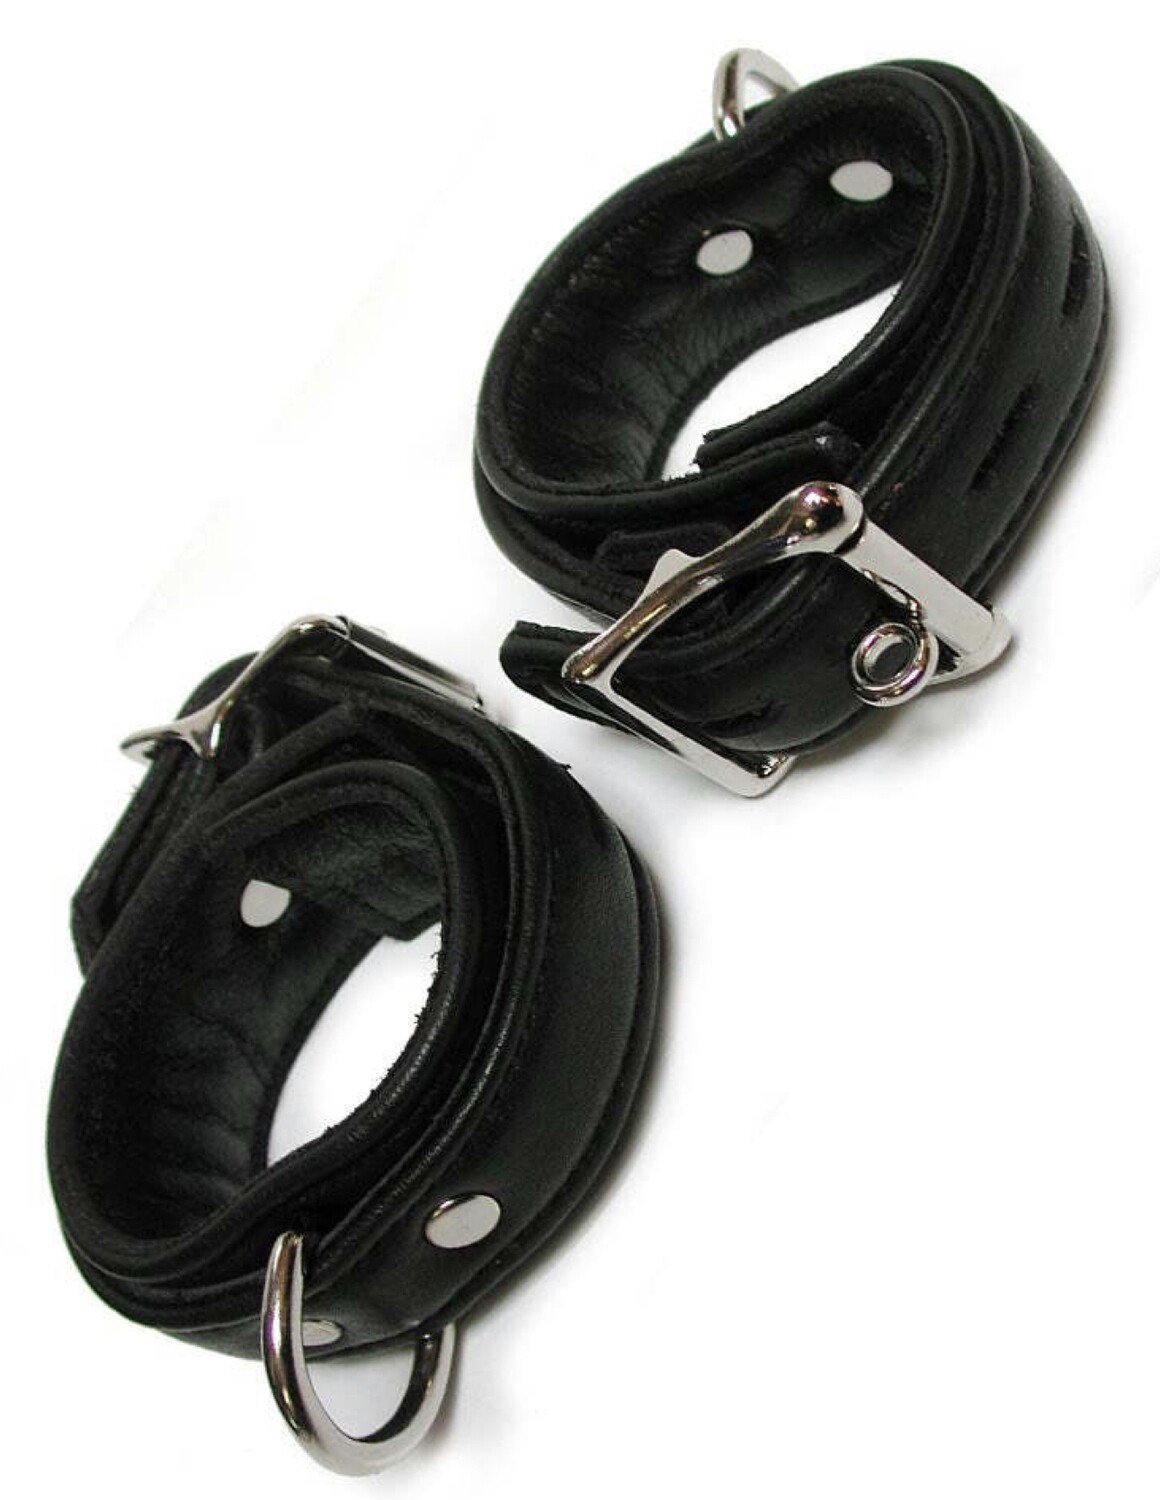 Stockroom: Premium Garment Leather Wrist Cuffs